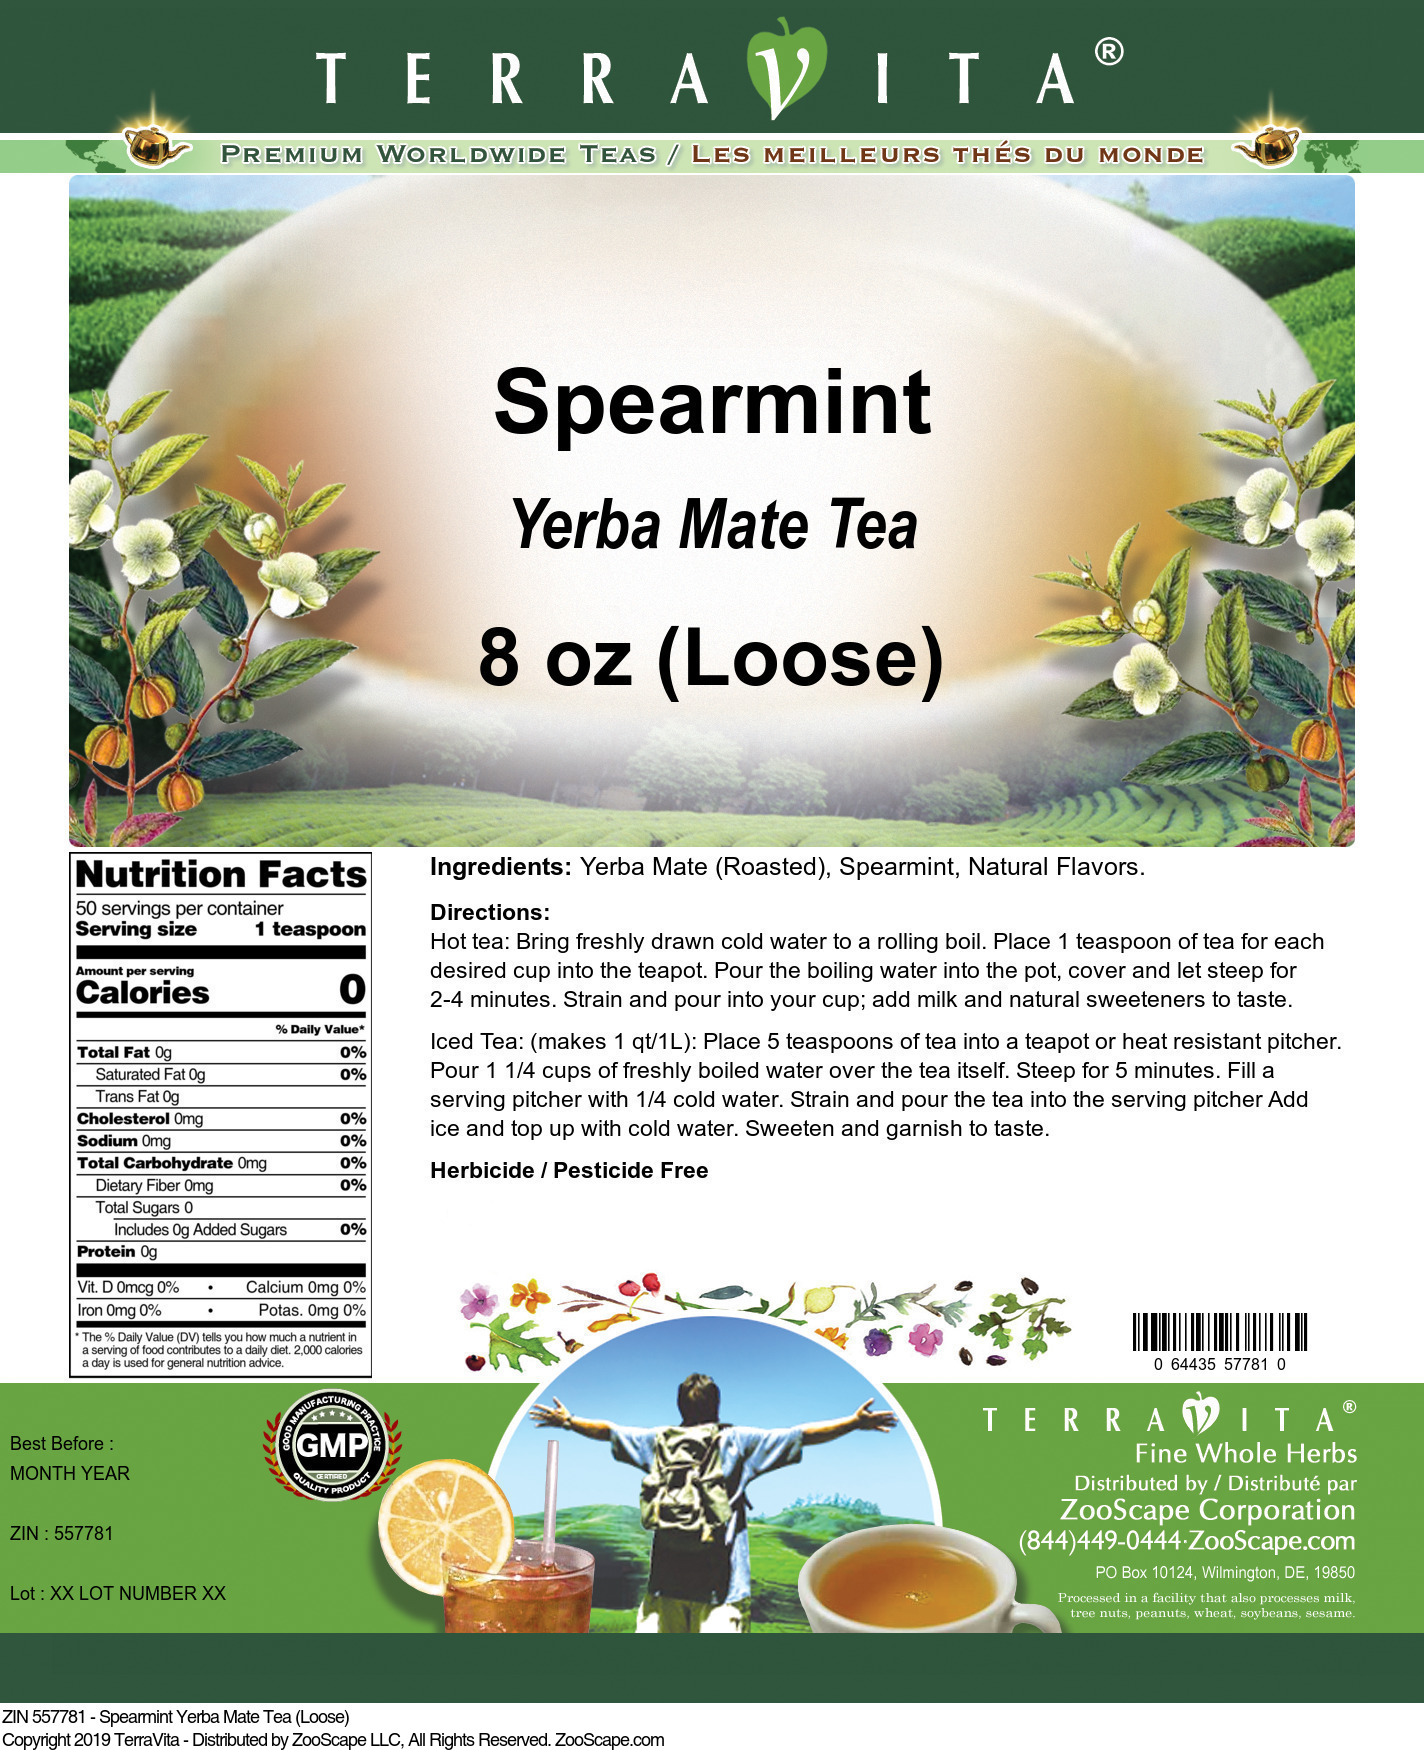 Spearmint Yerba Mate Tea (Loose) - Label